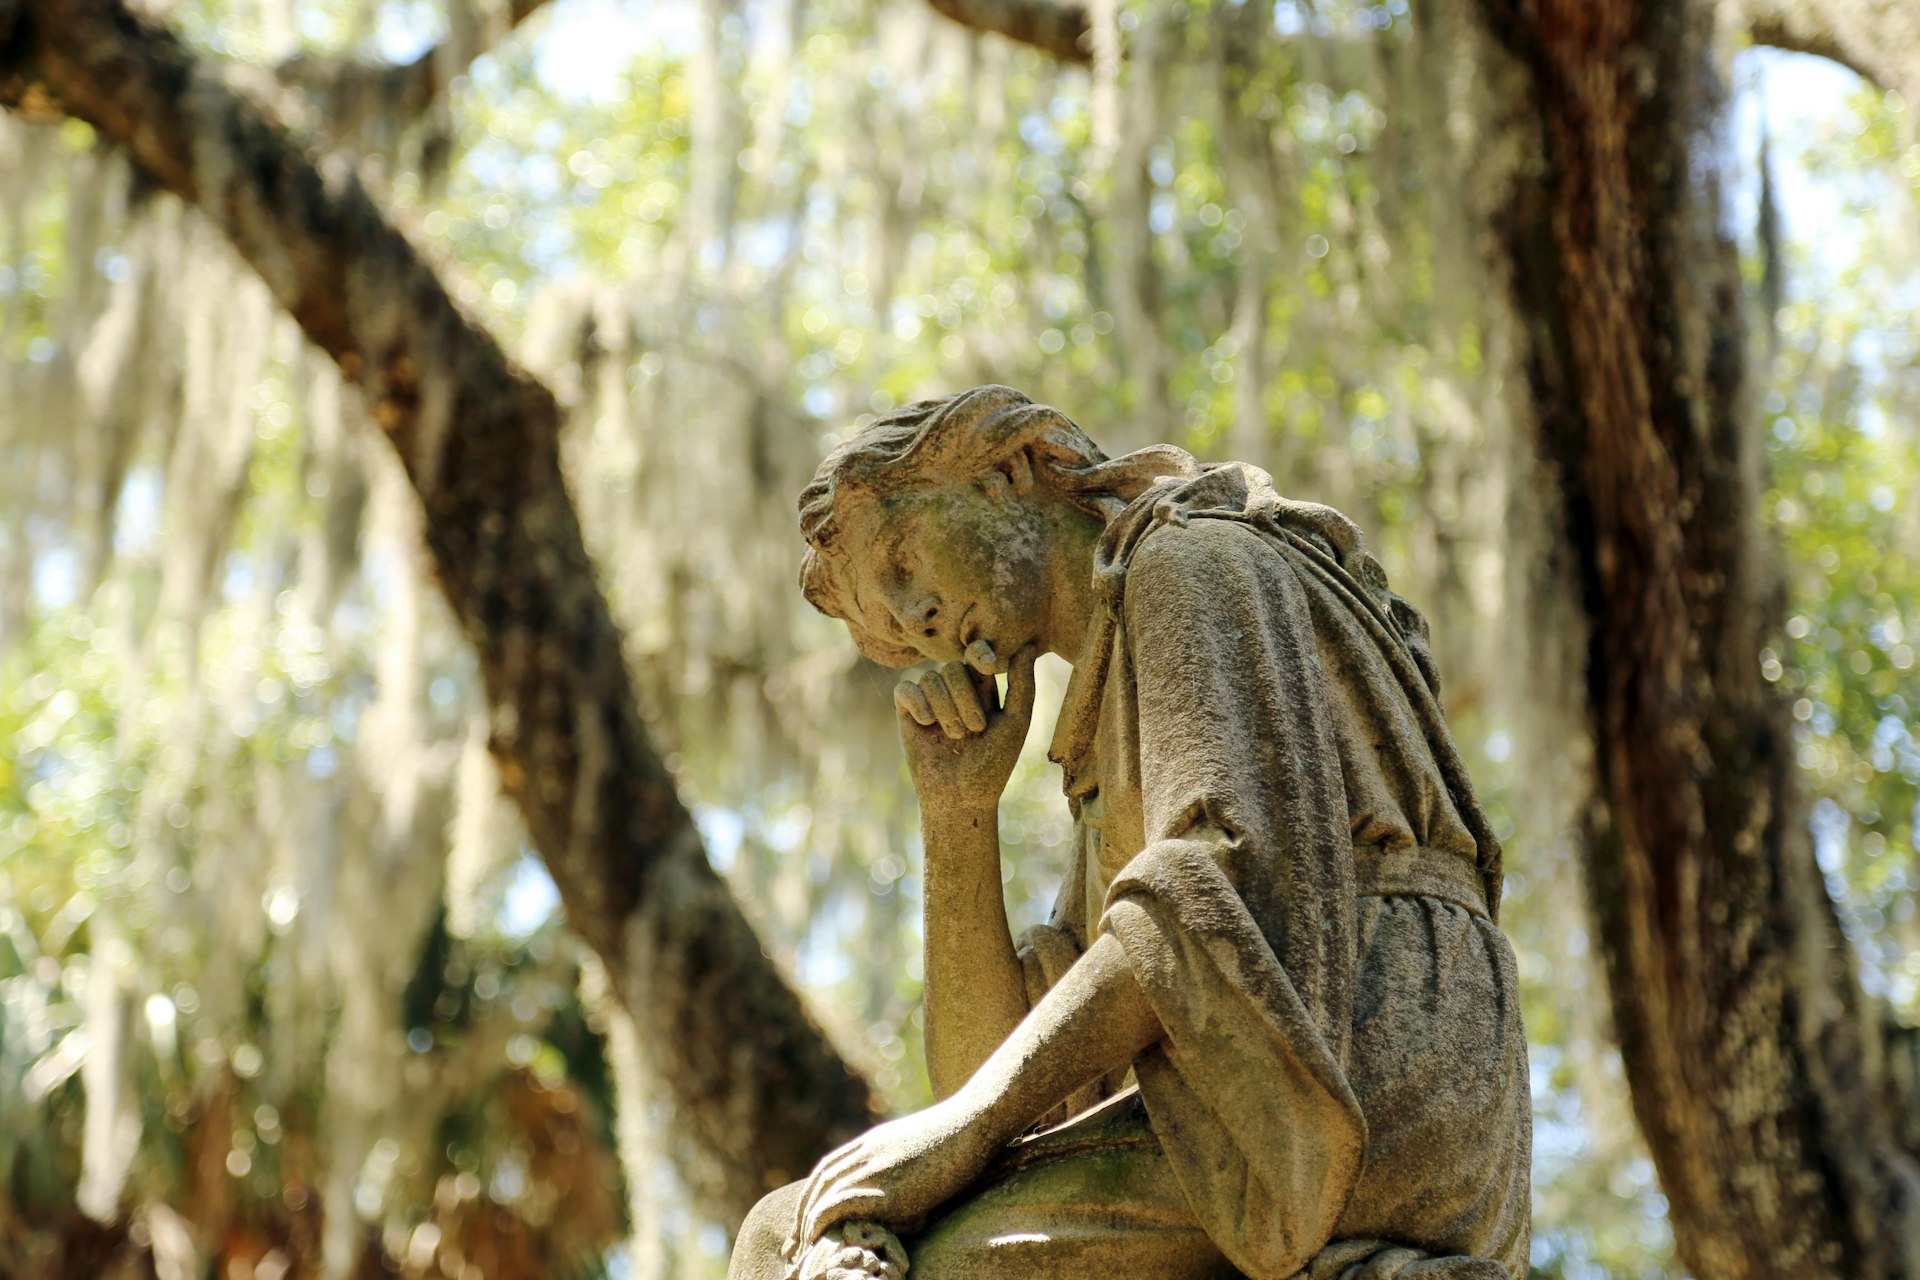 Mourning sculpture at the Bonaventure Cemetery in Savannah